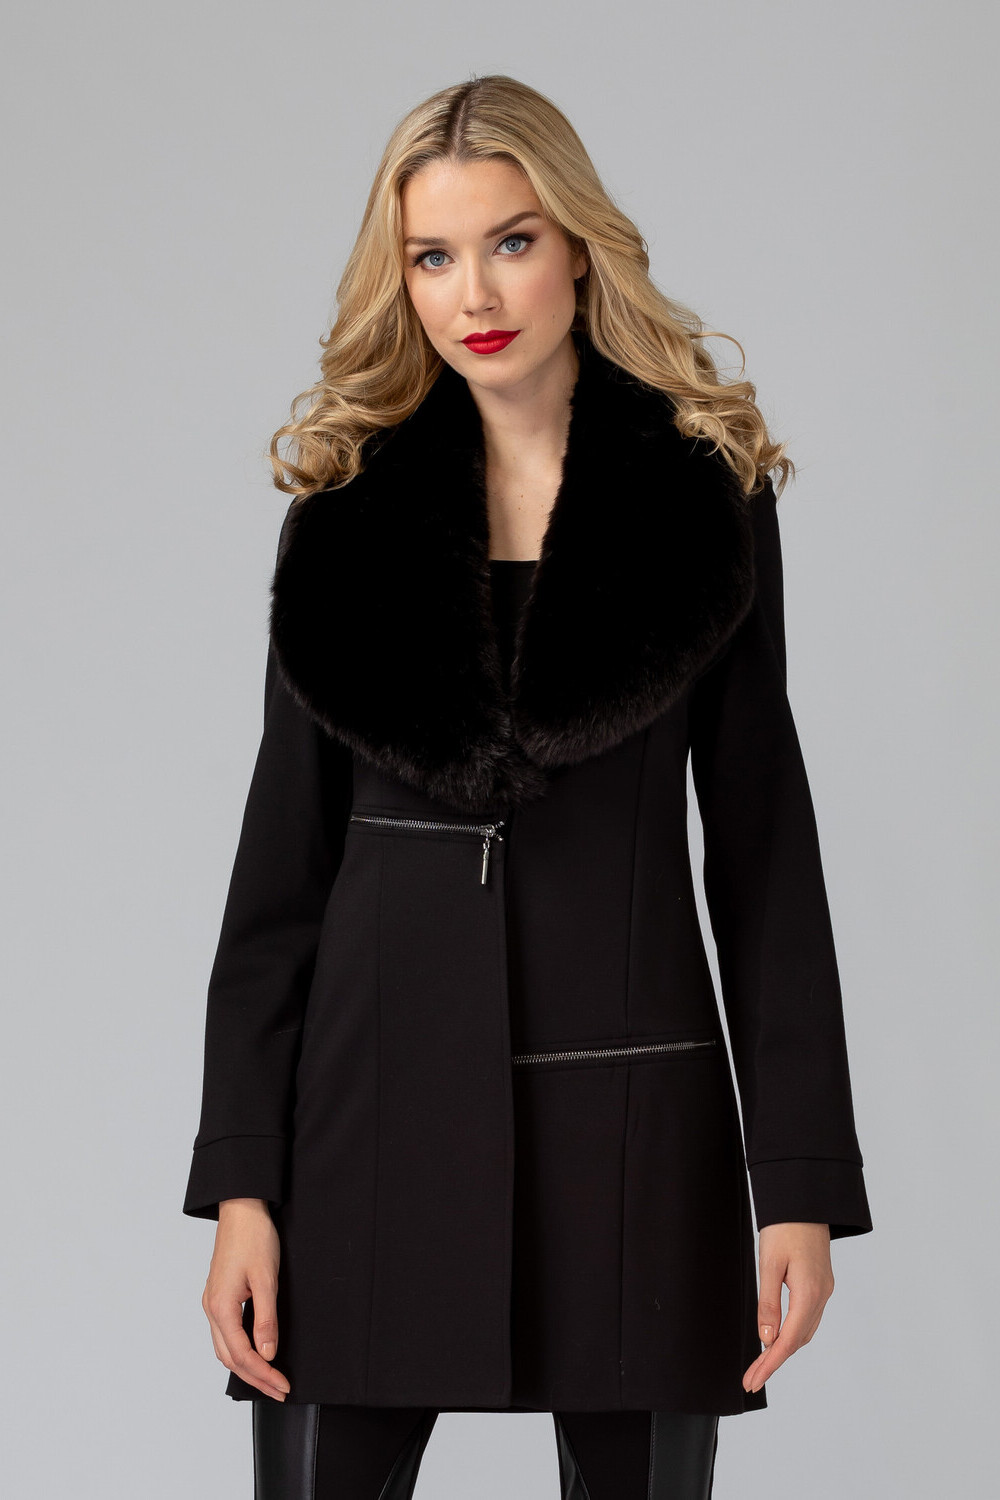 Joseph Ribkoff coat style 193727. Black